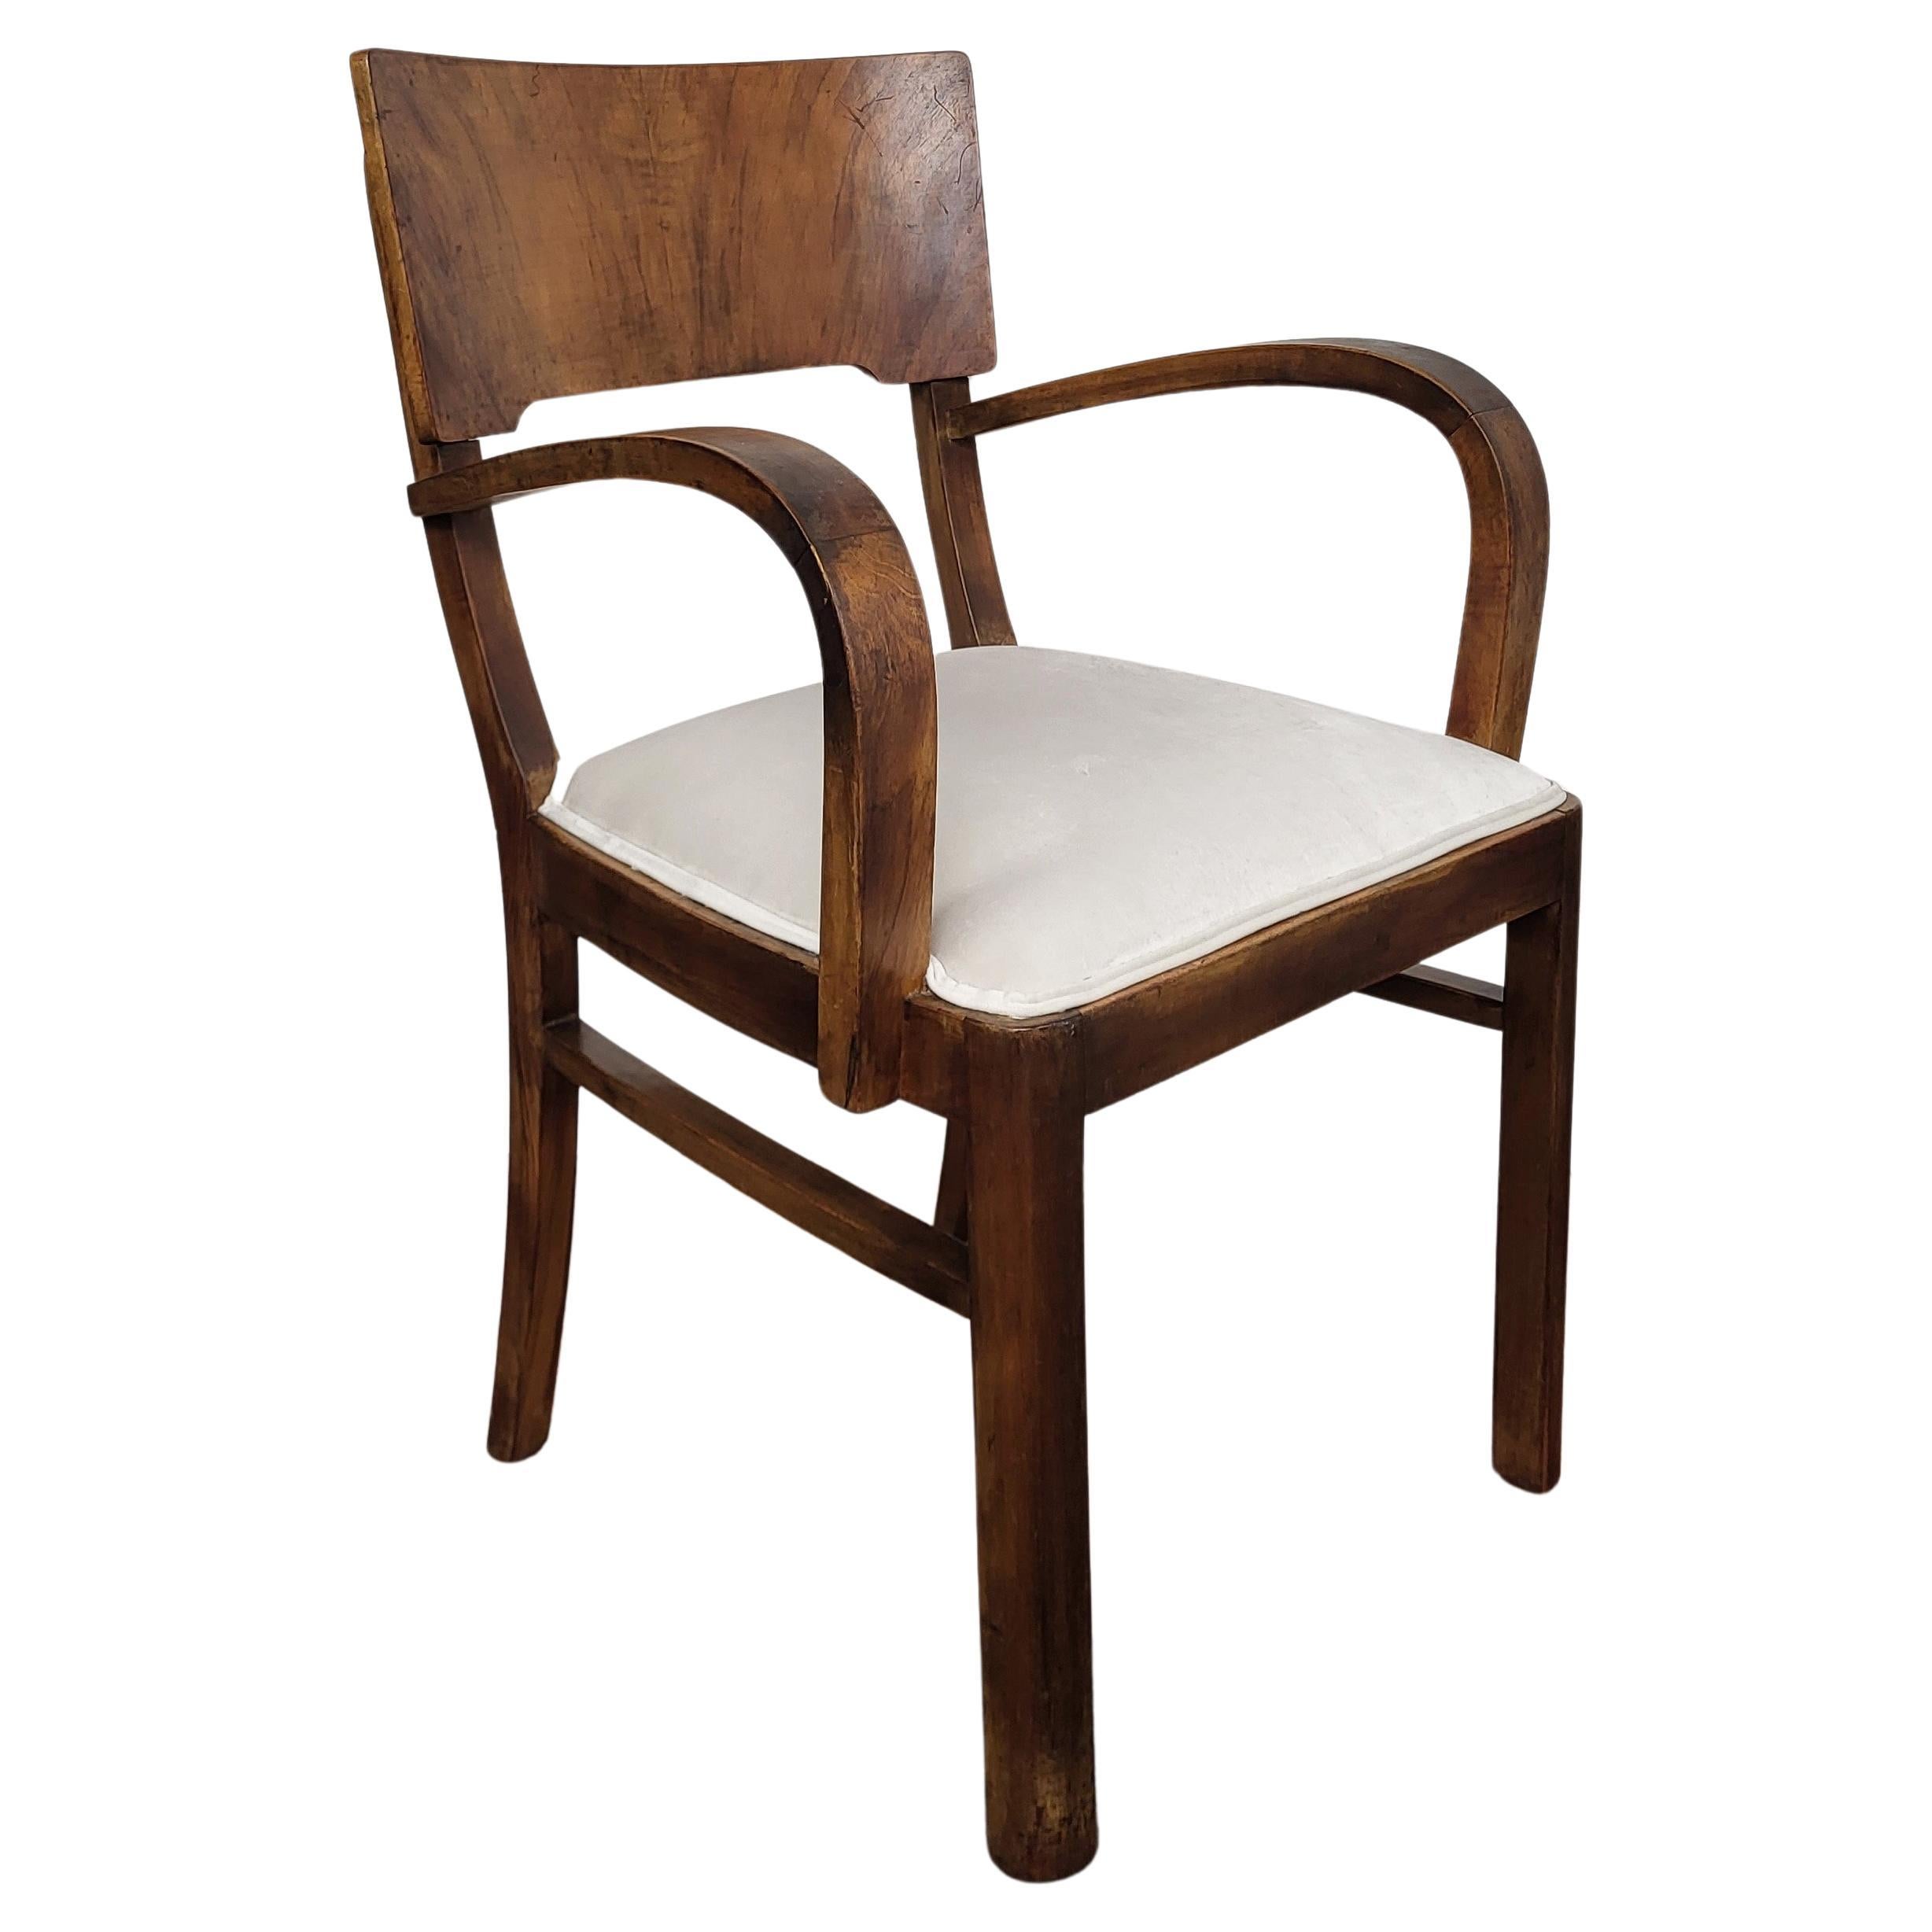 1940s Italian Art Deco Walnut Newly Upholstered Open Armchair Office Desk Chair For Sale